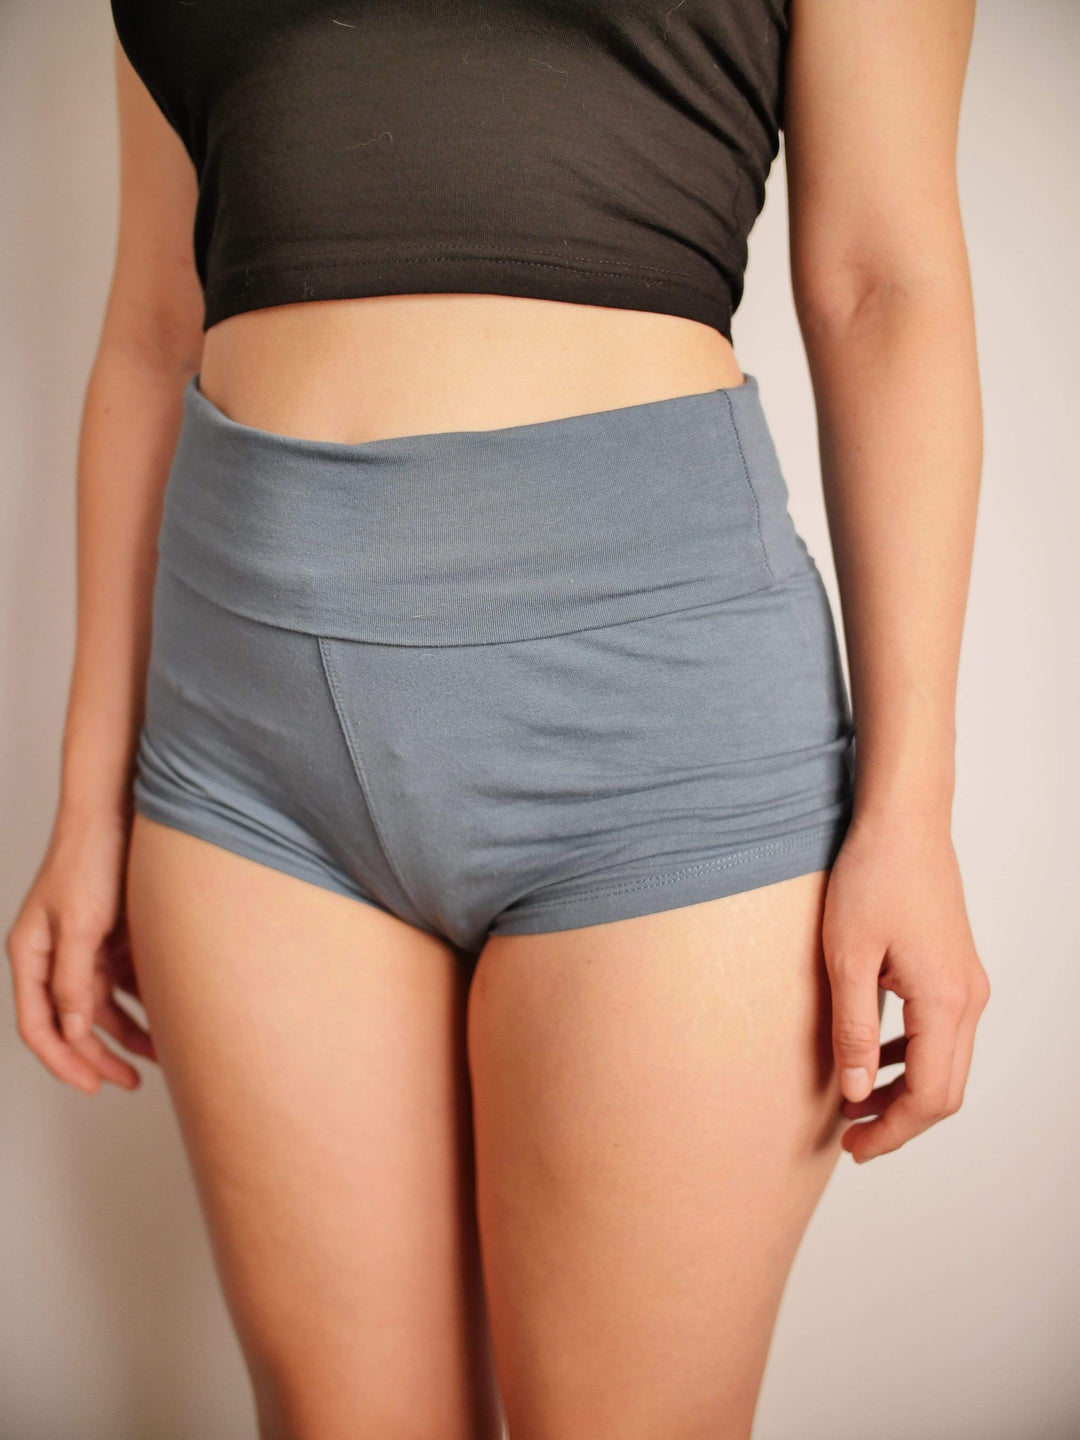 PixelThat Punderwear Yoga Shorts Peek-at-chu Yoga Shorts/Pants